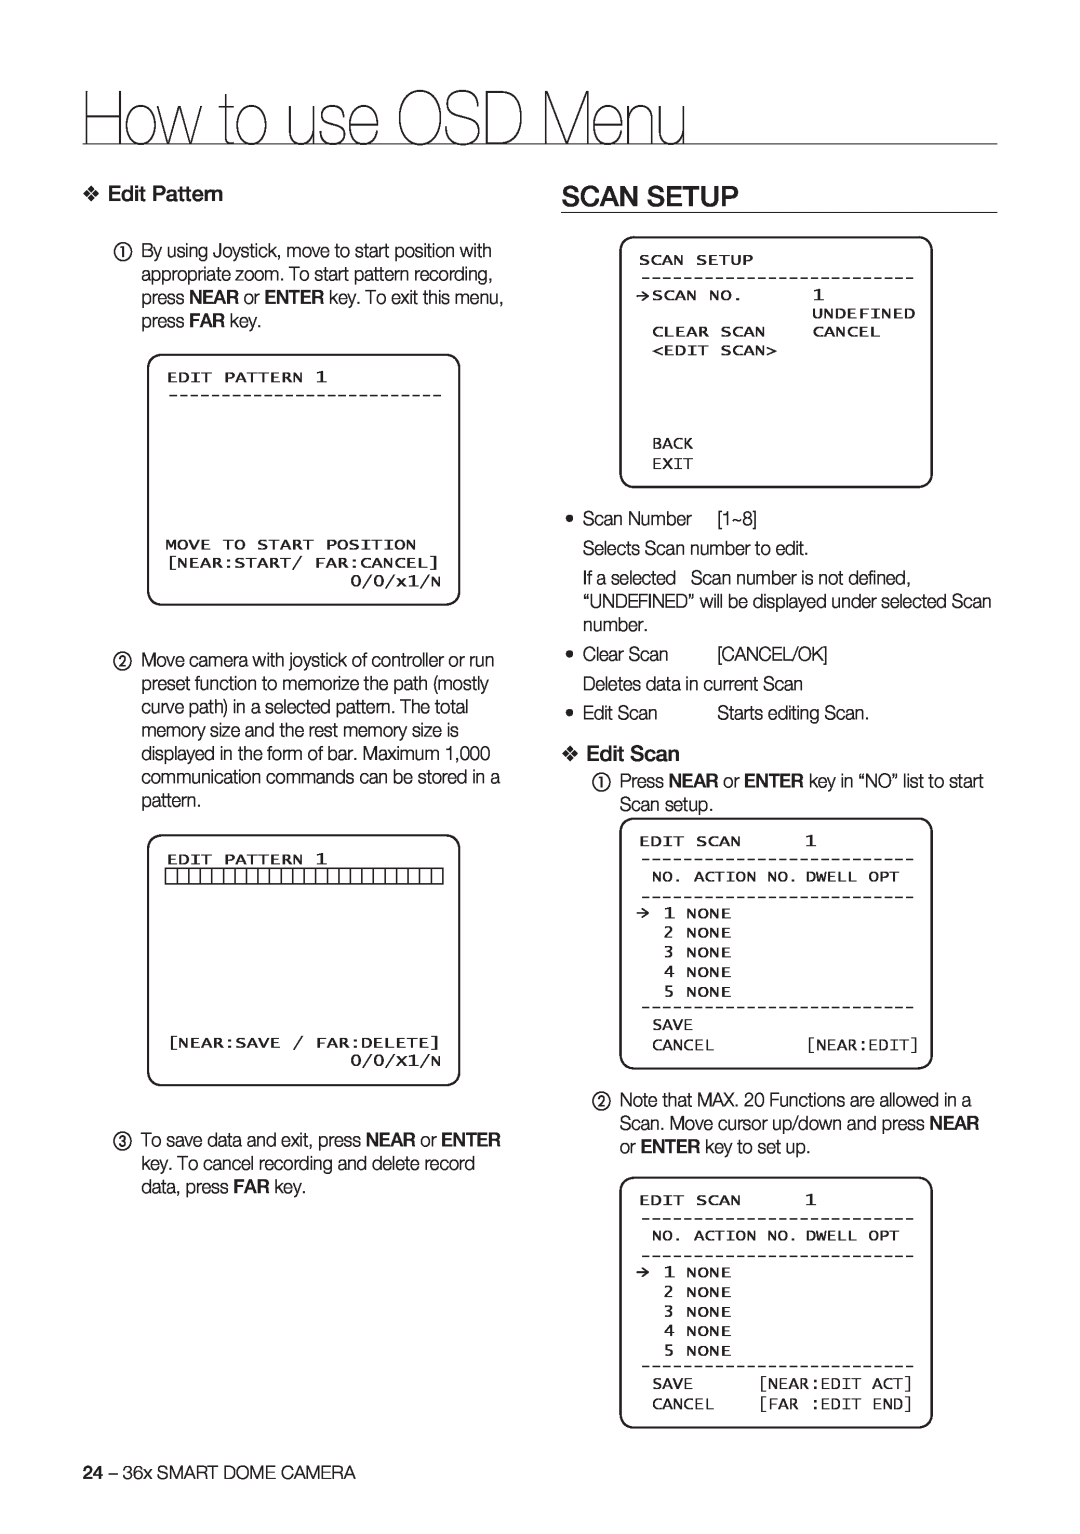 Samsung SCC-C7478P manual Scan Setup, Edit Pattern, Edit Scan, How to use OSD Menu 